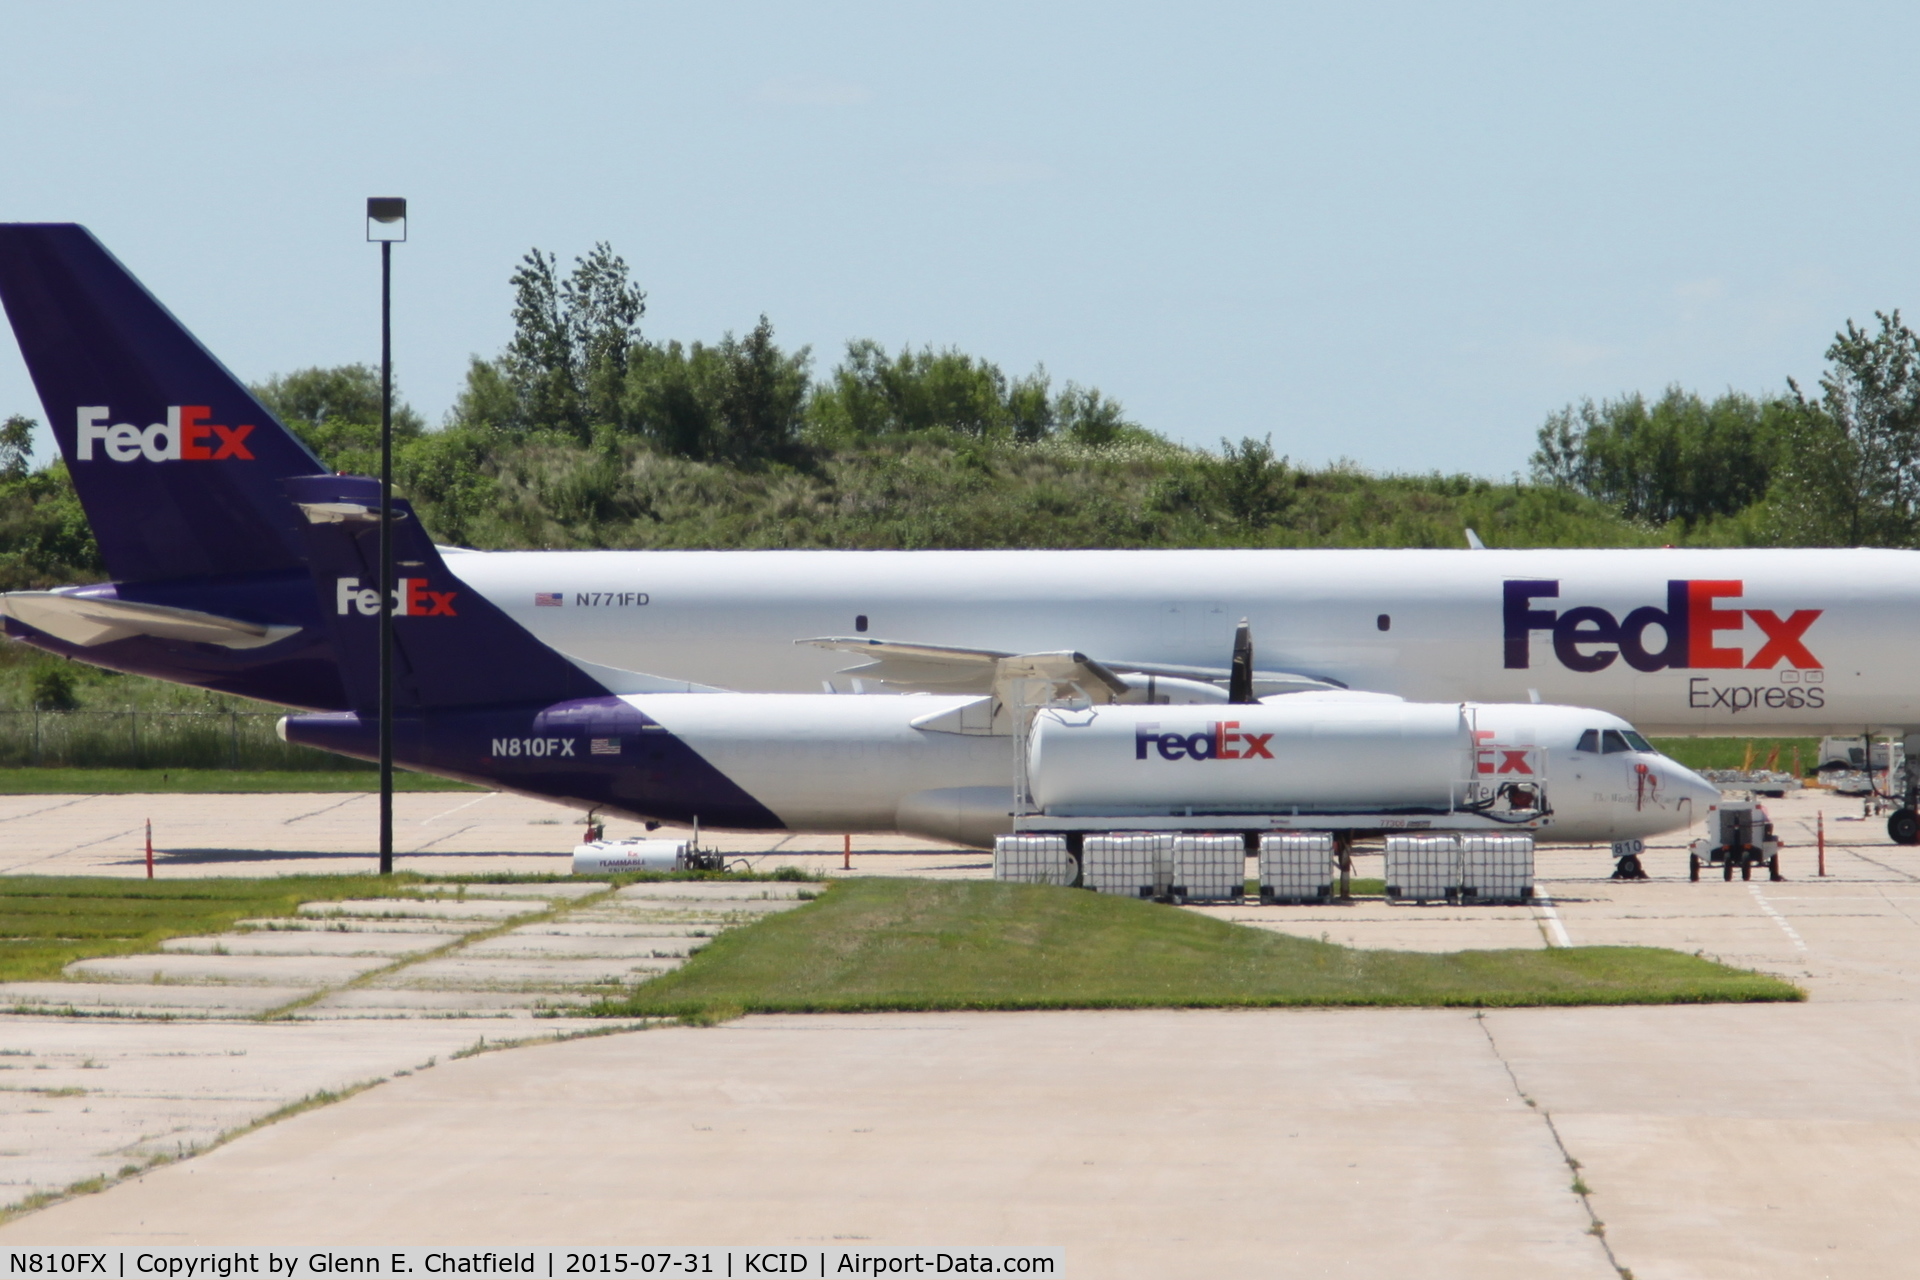 N810FX, 1991 ATR 72-202 C/N 220, Parked at the FedEx ramp, hiding behind a fuel tank